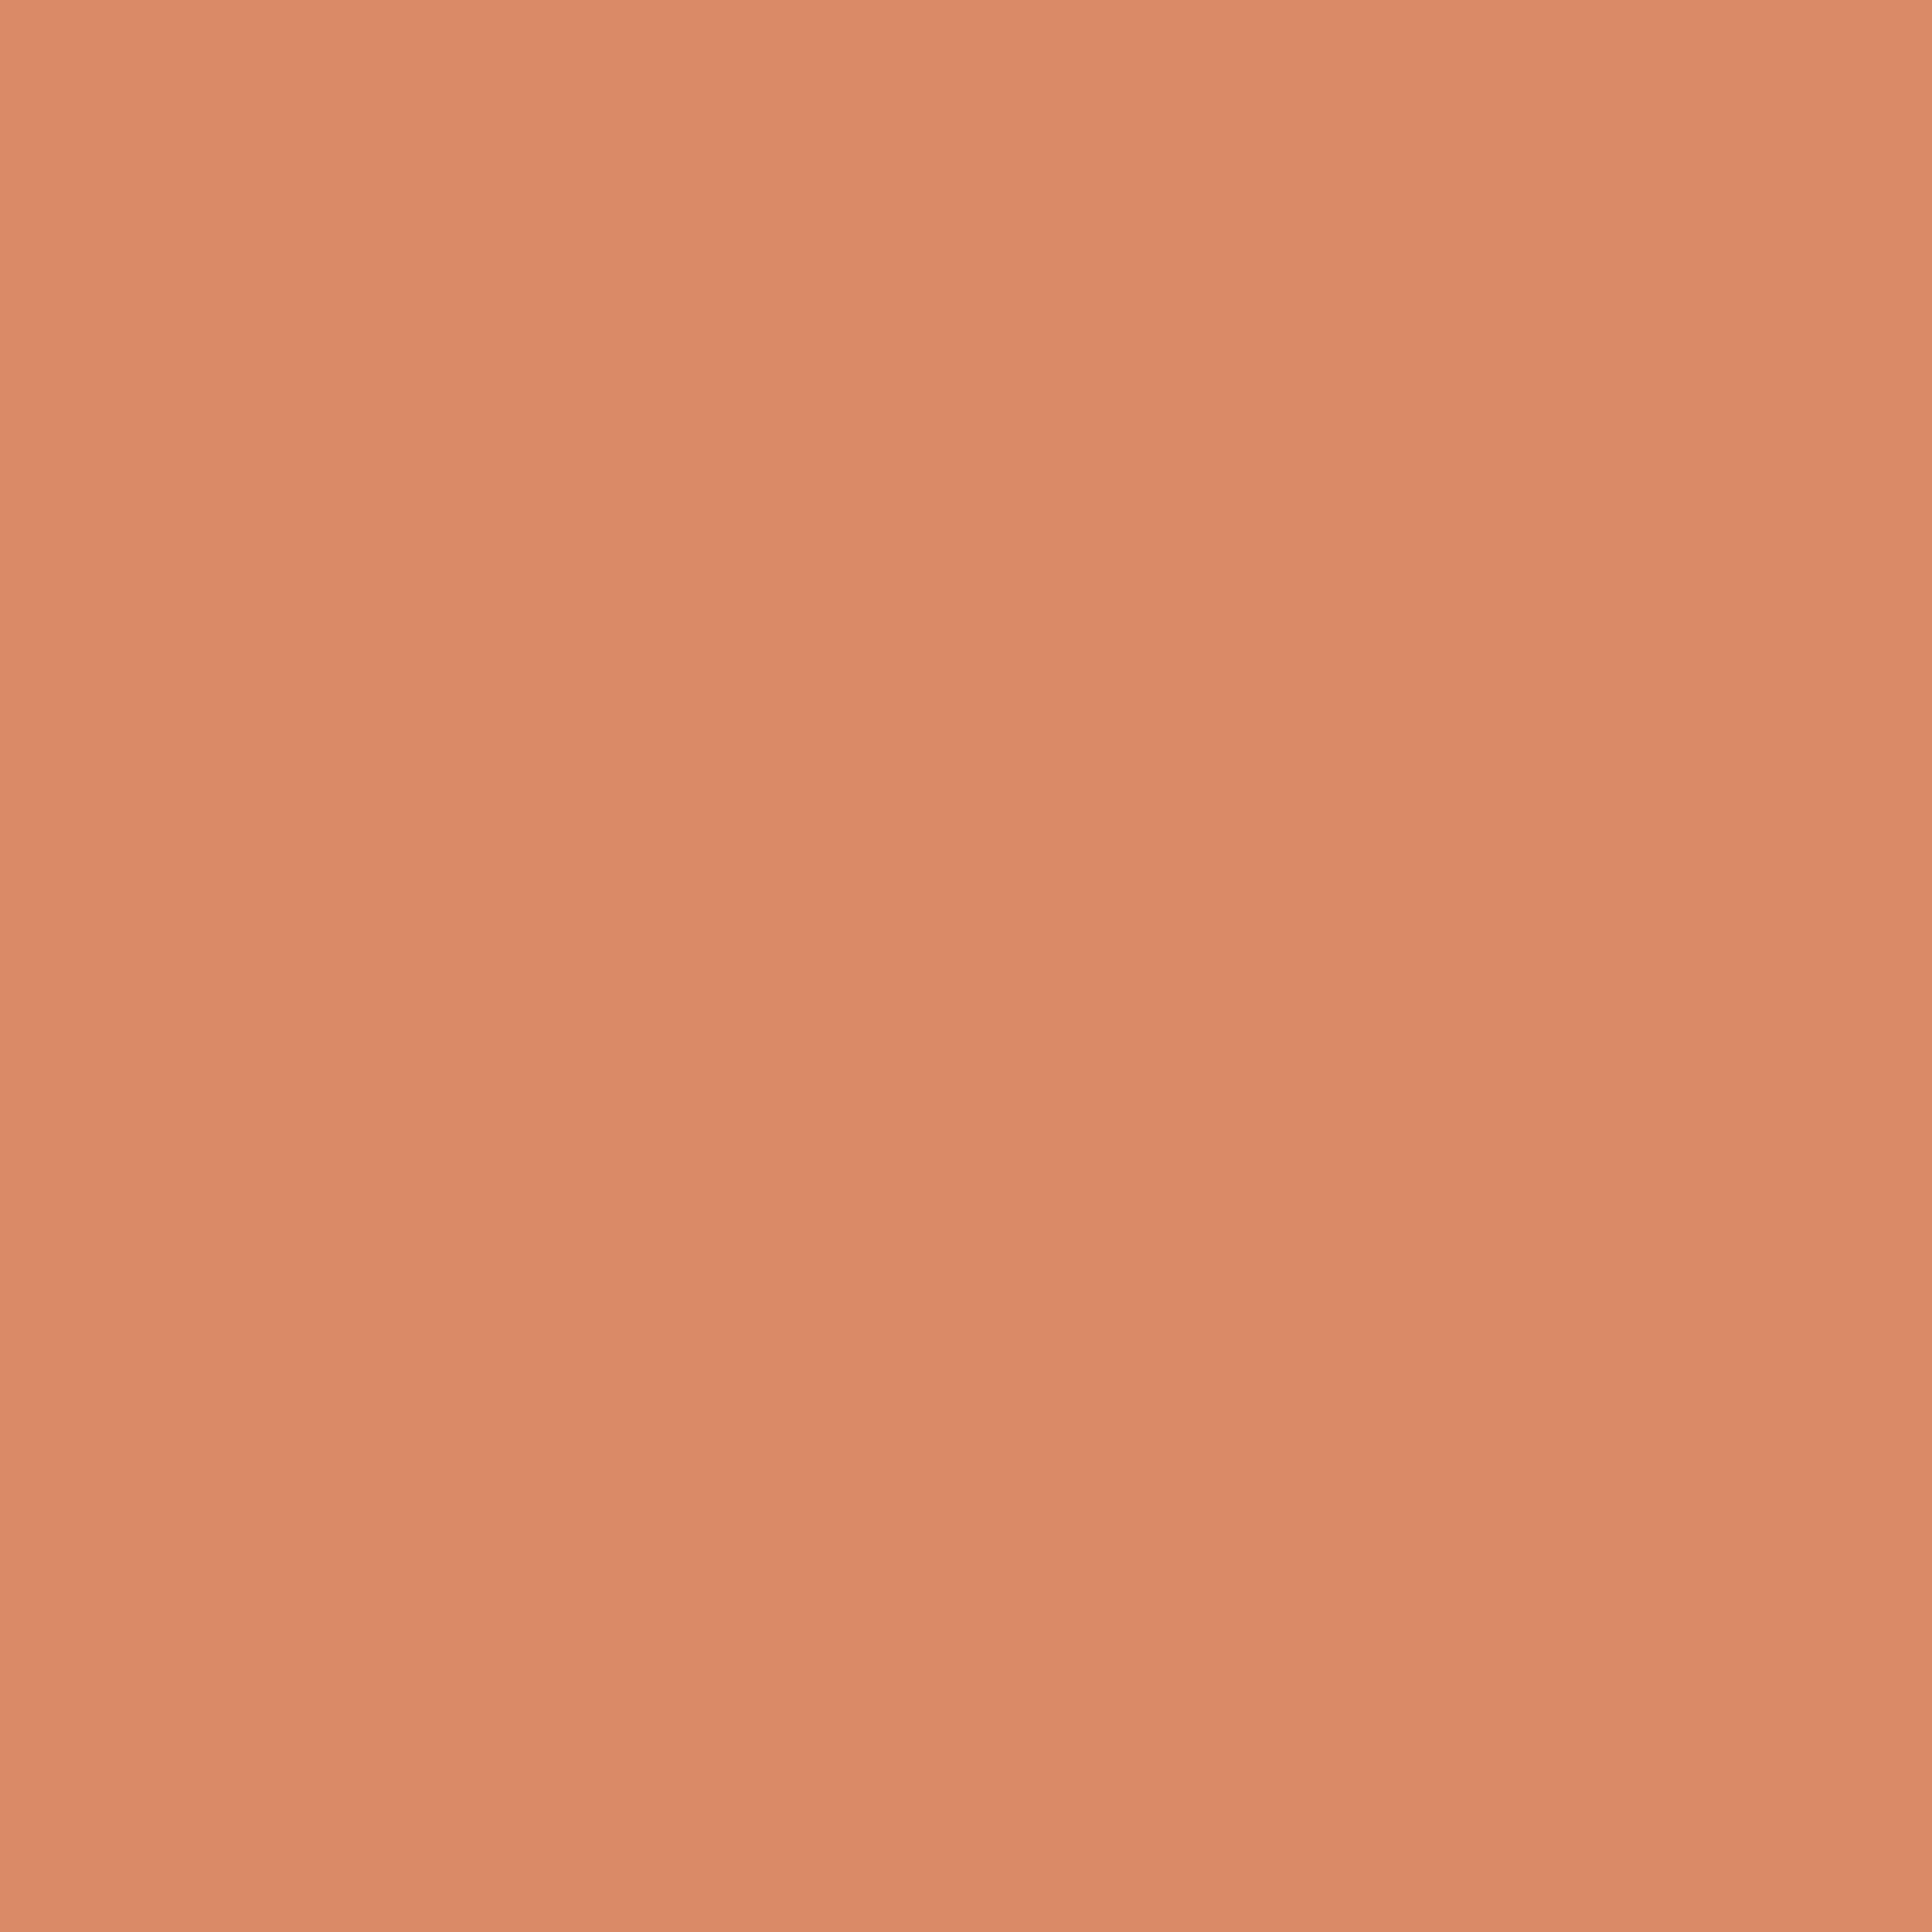 3600x3600 Copper Crayola Solid Color Background